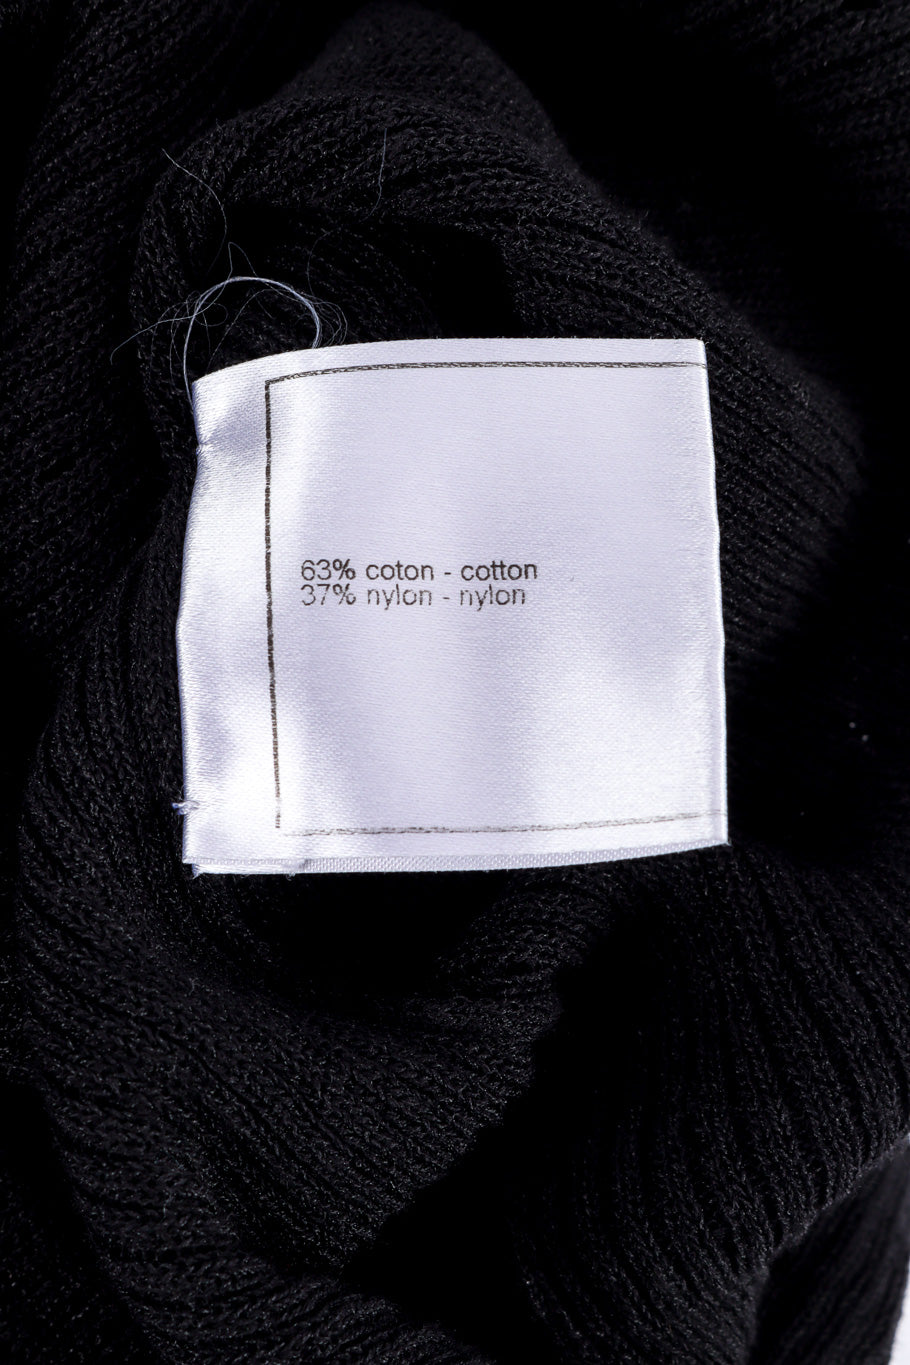 Chanel Logo Knit Tank Top fabric content label closeup @Recessla